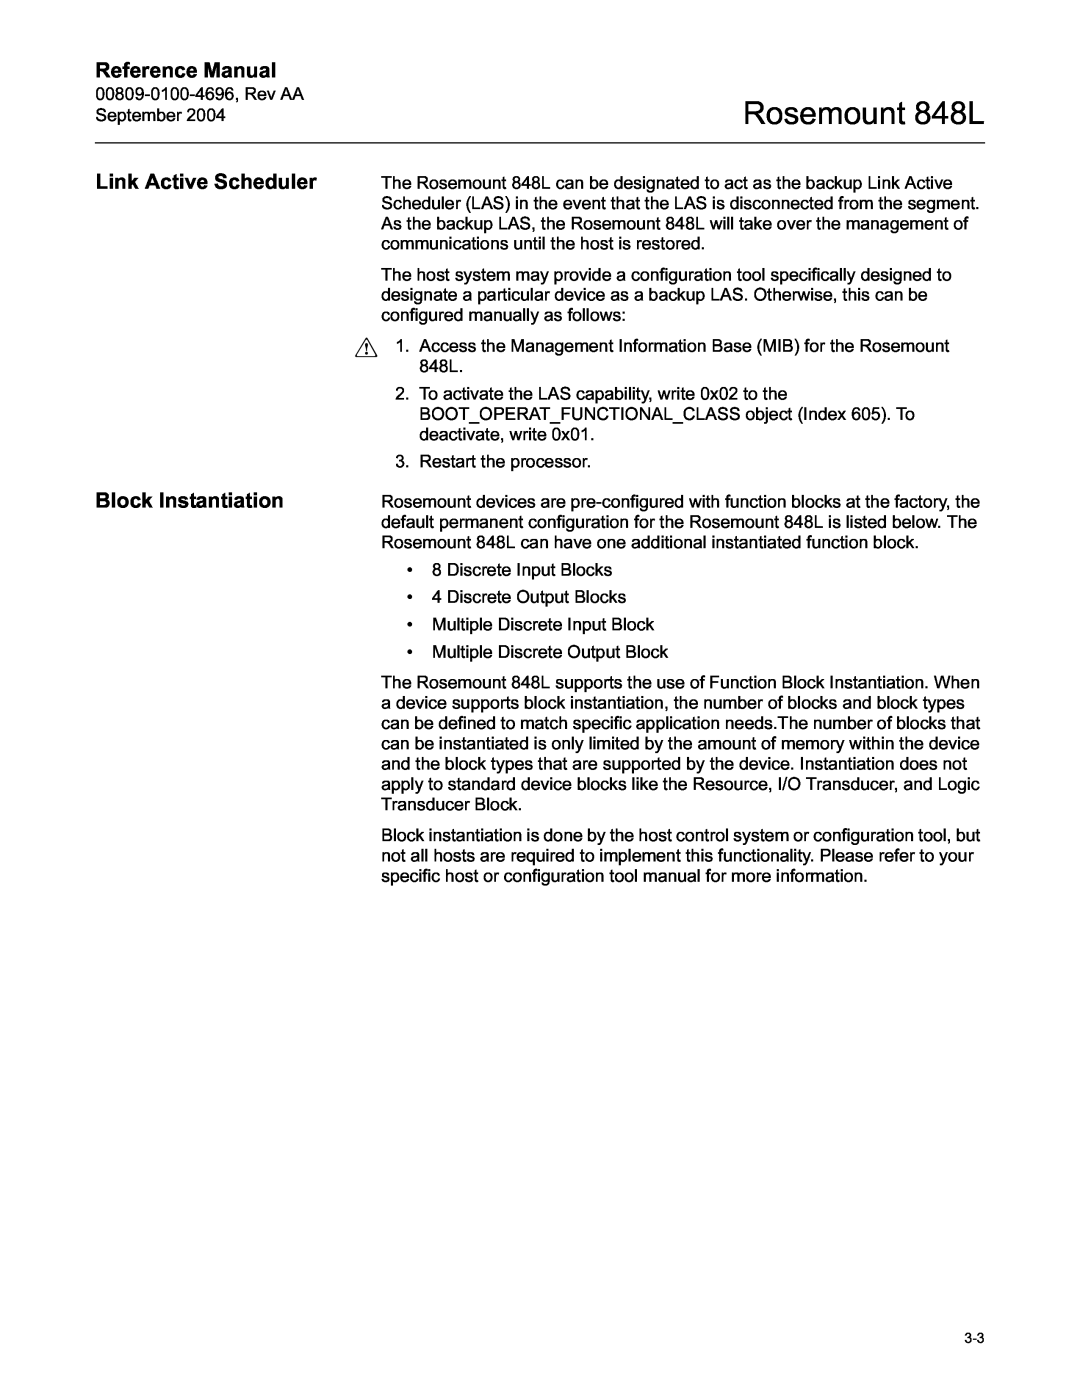 Emerson manual Link Active Scheduler Block Instantiation, Rosemount 848L, Reference Manual 